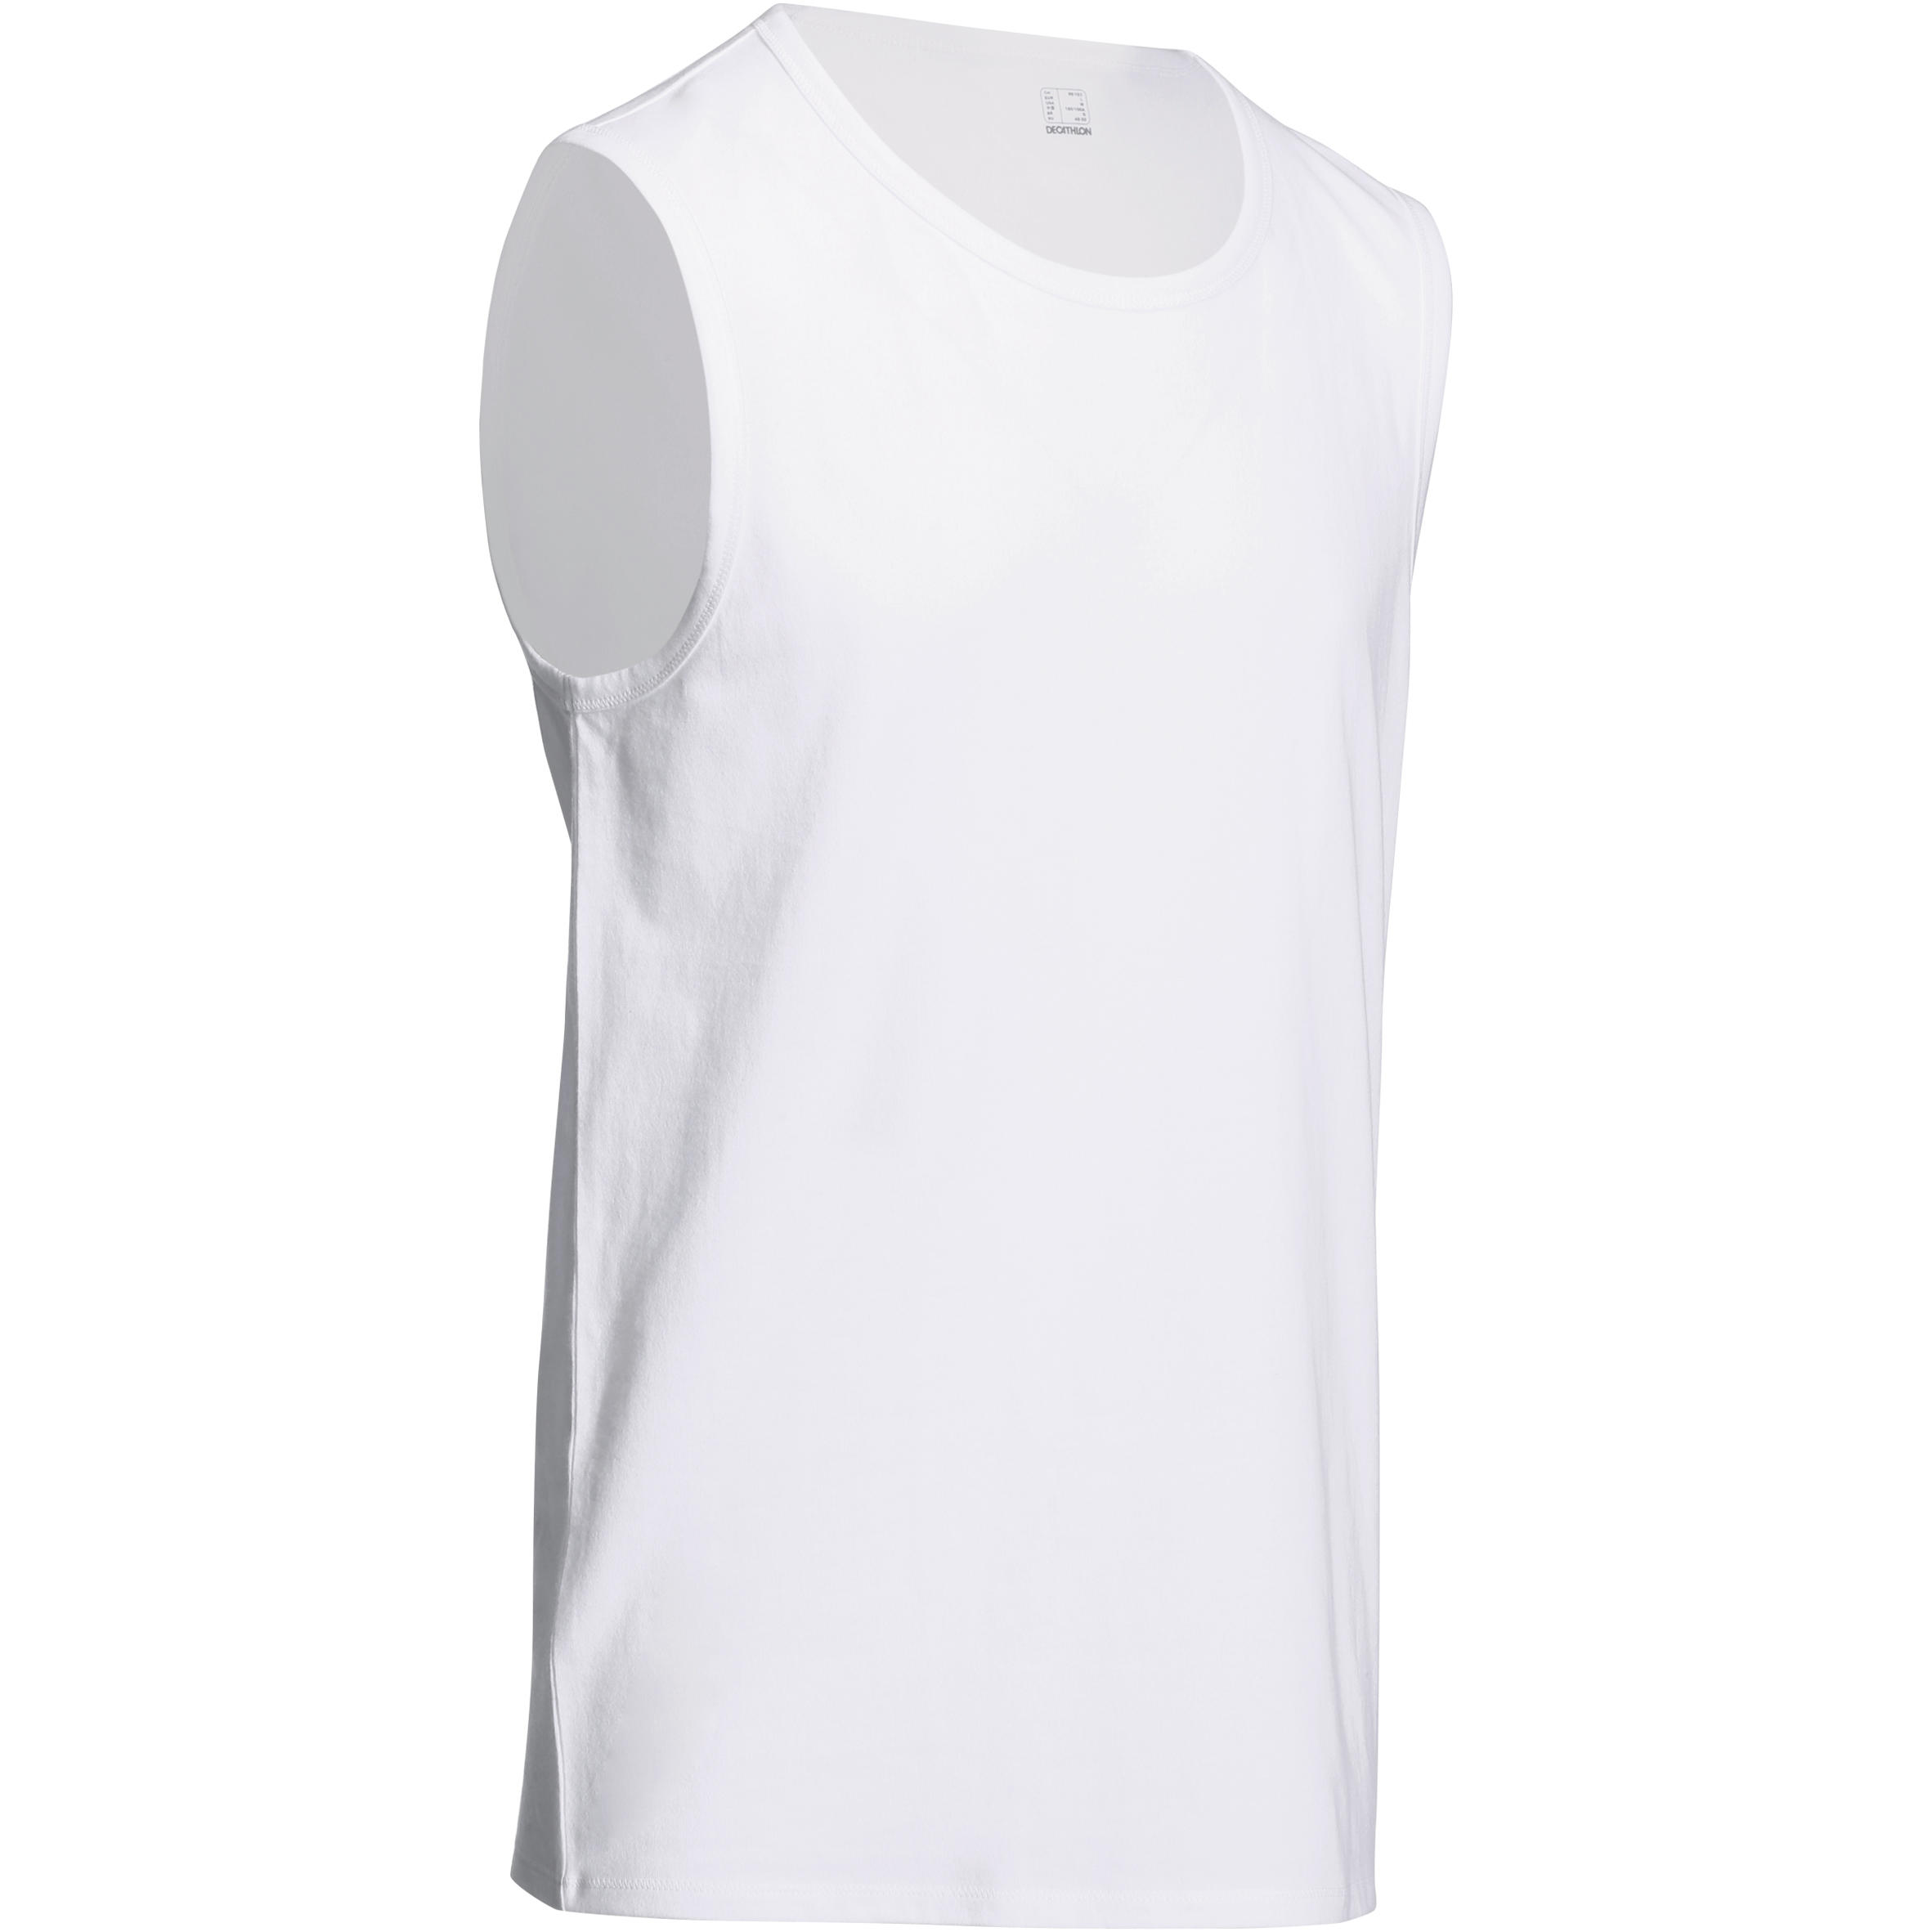 DOMYOS Essential Cotton Fitness Tank Top - White